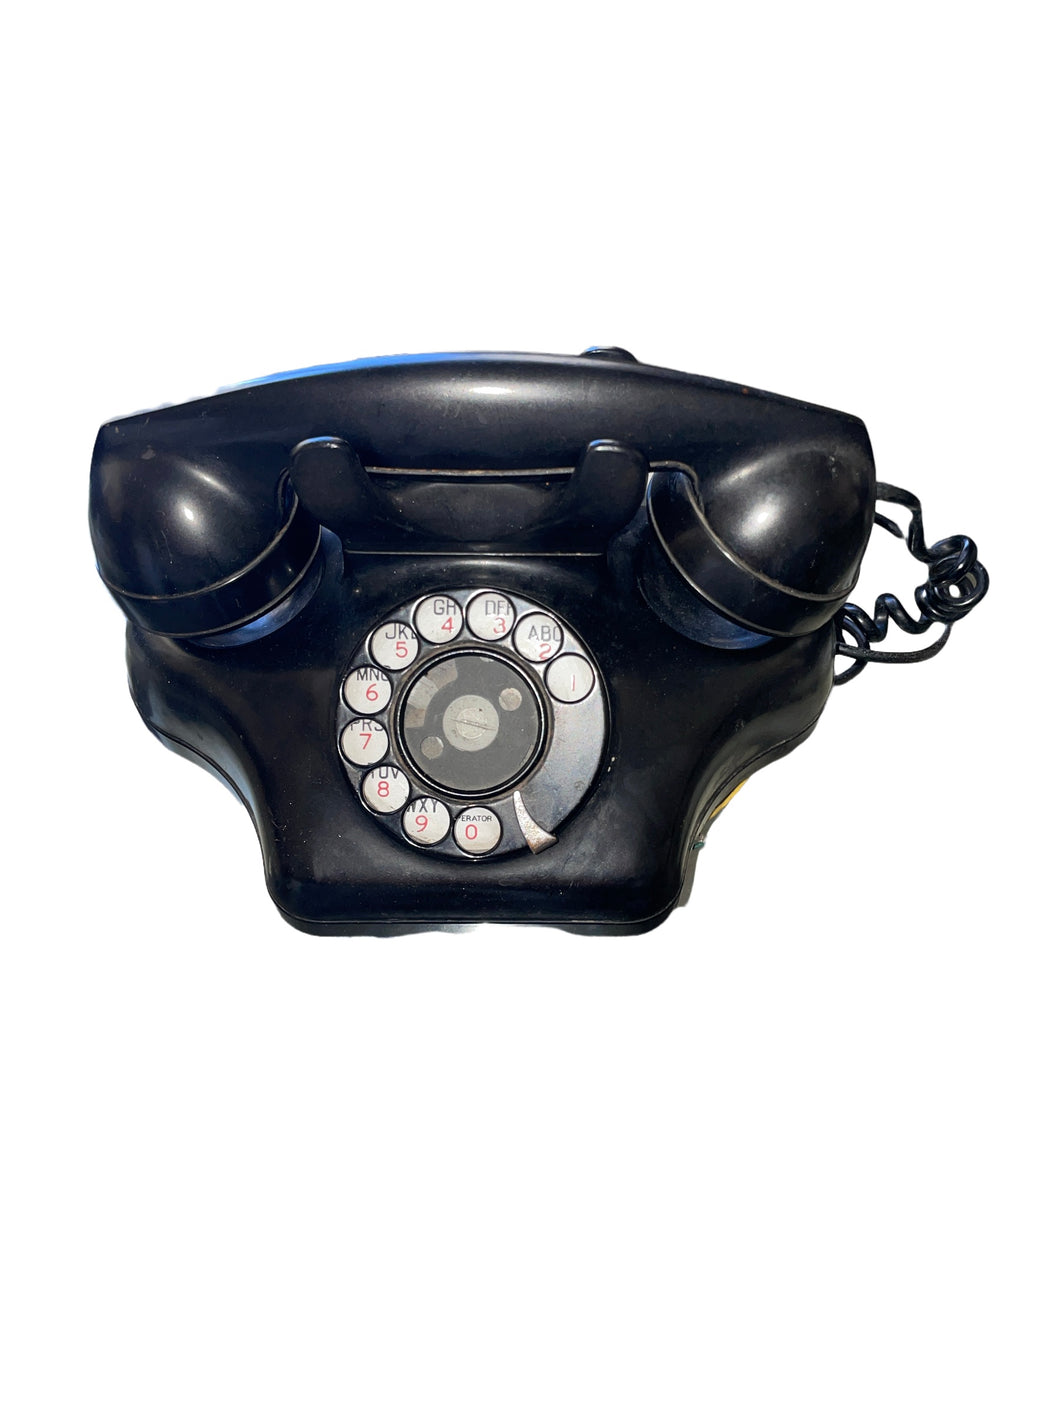 Black Rotary Phone (Non-Operational)